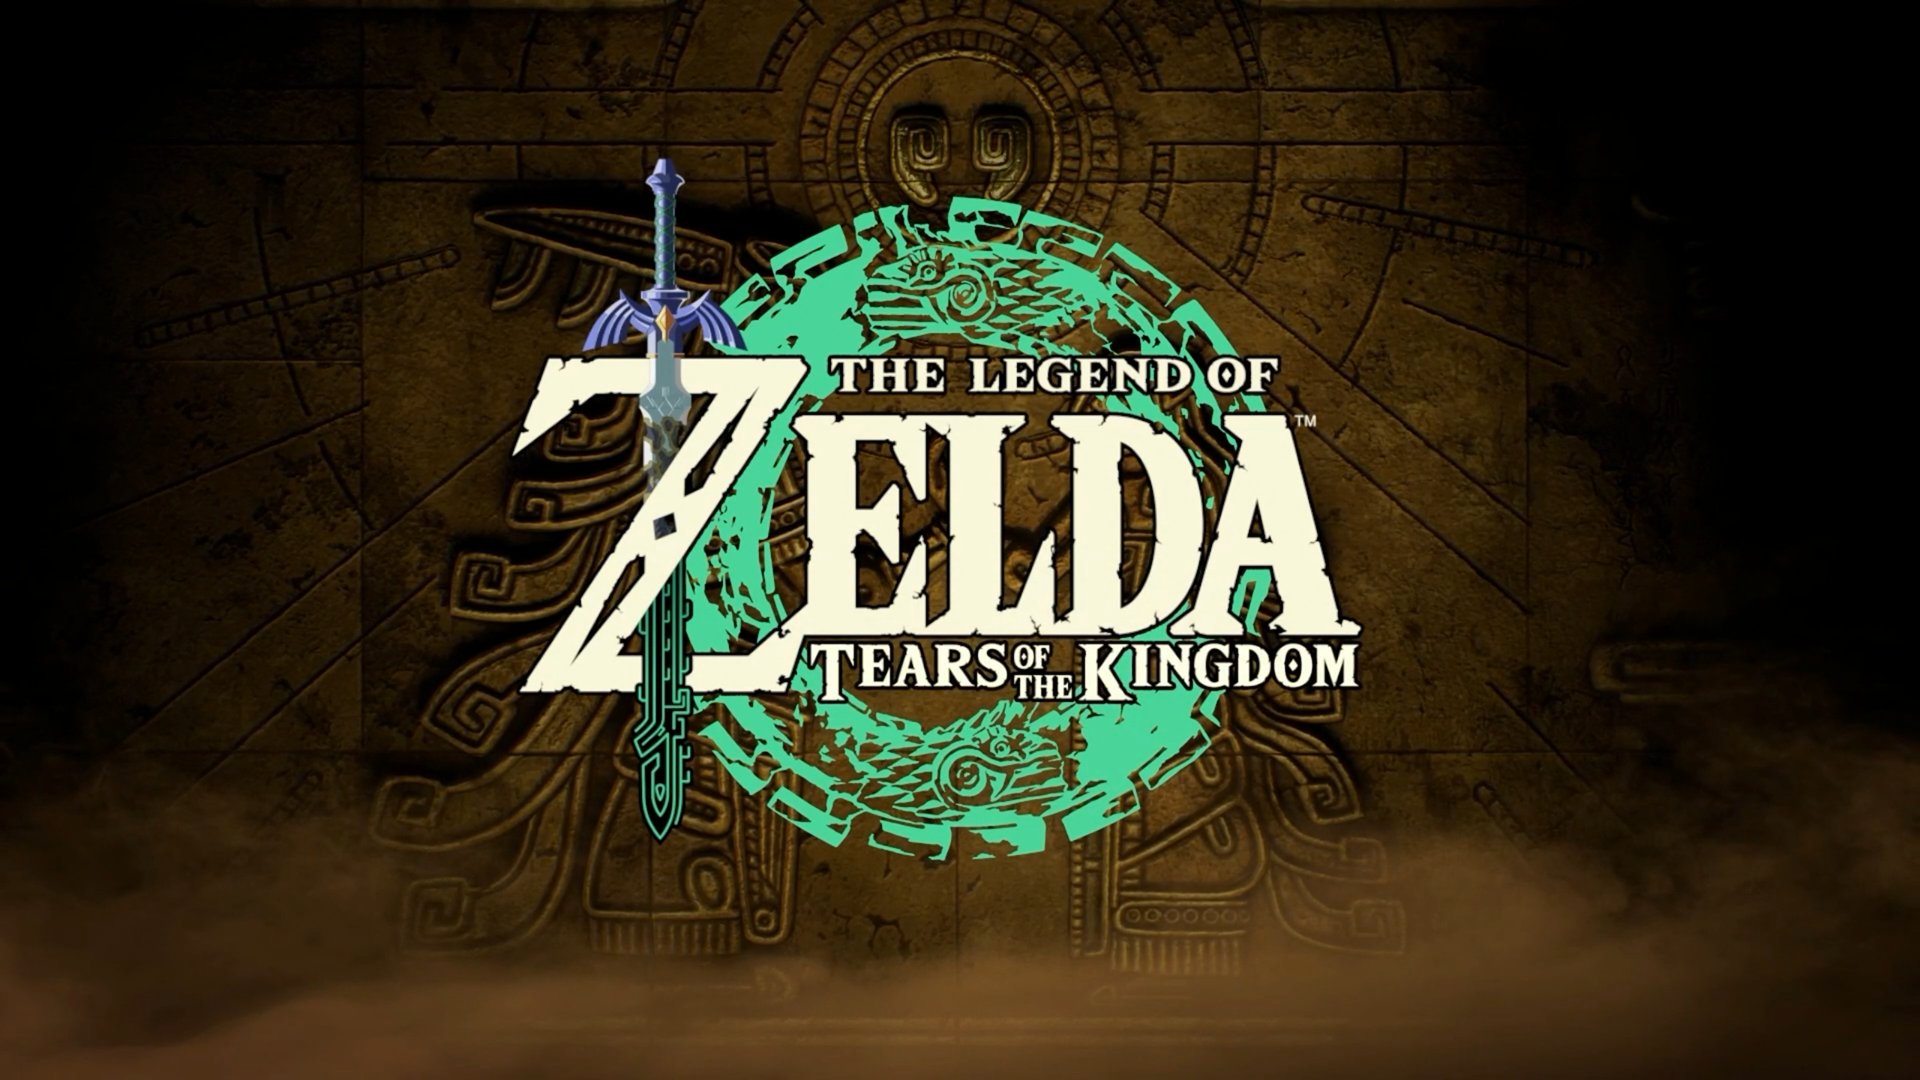 The Legend of Zelda: Tears of Kingdom - Nintendo